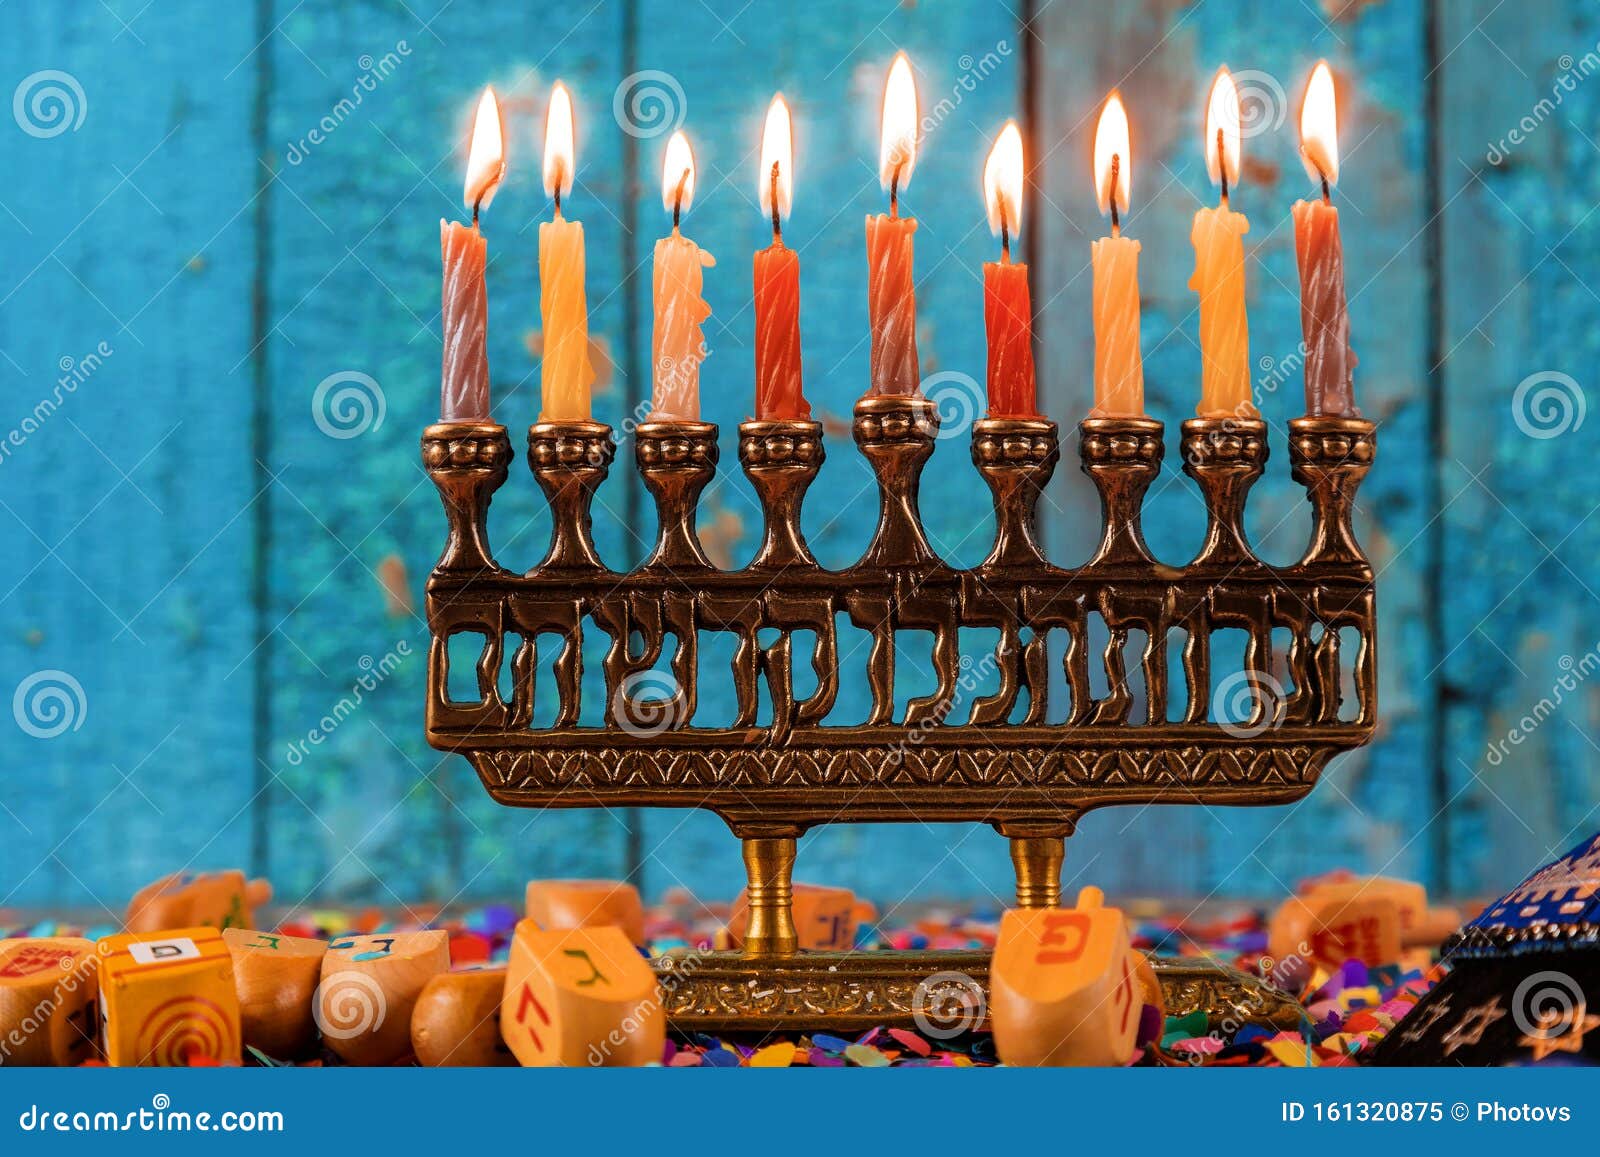 happy hanukkah of jewish holiday hanukkah with menorah